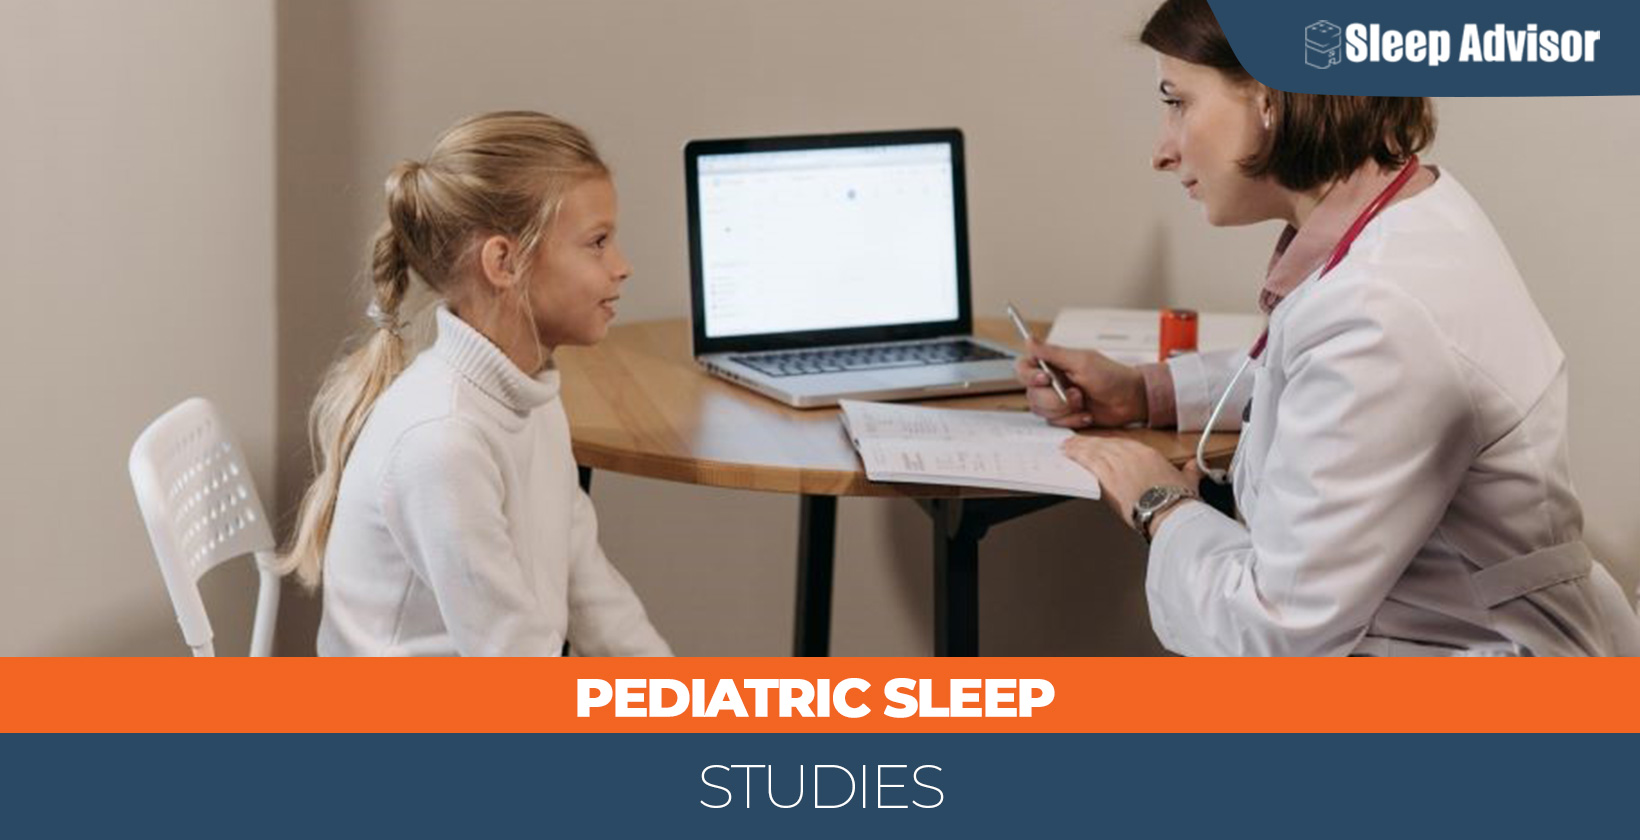 Pediatric Sleep Studies: The Process, How to Prepare, & More